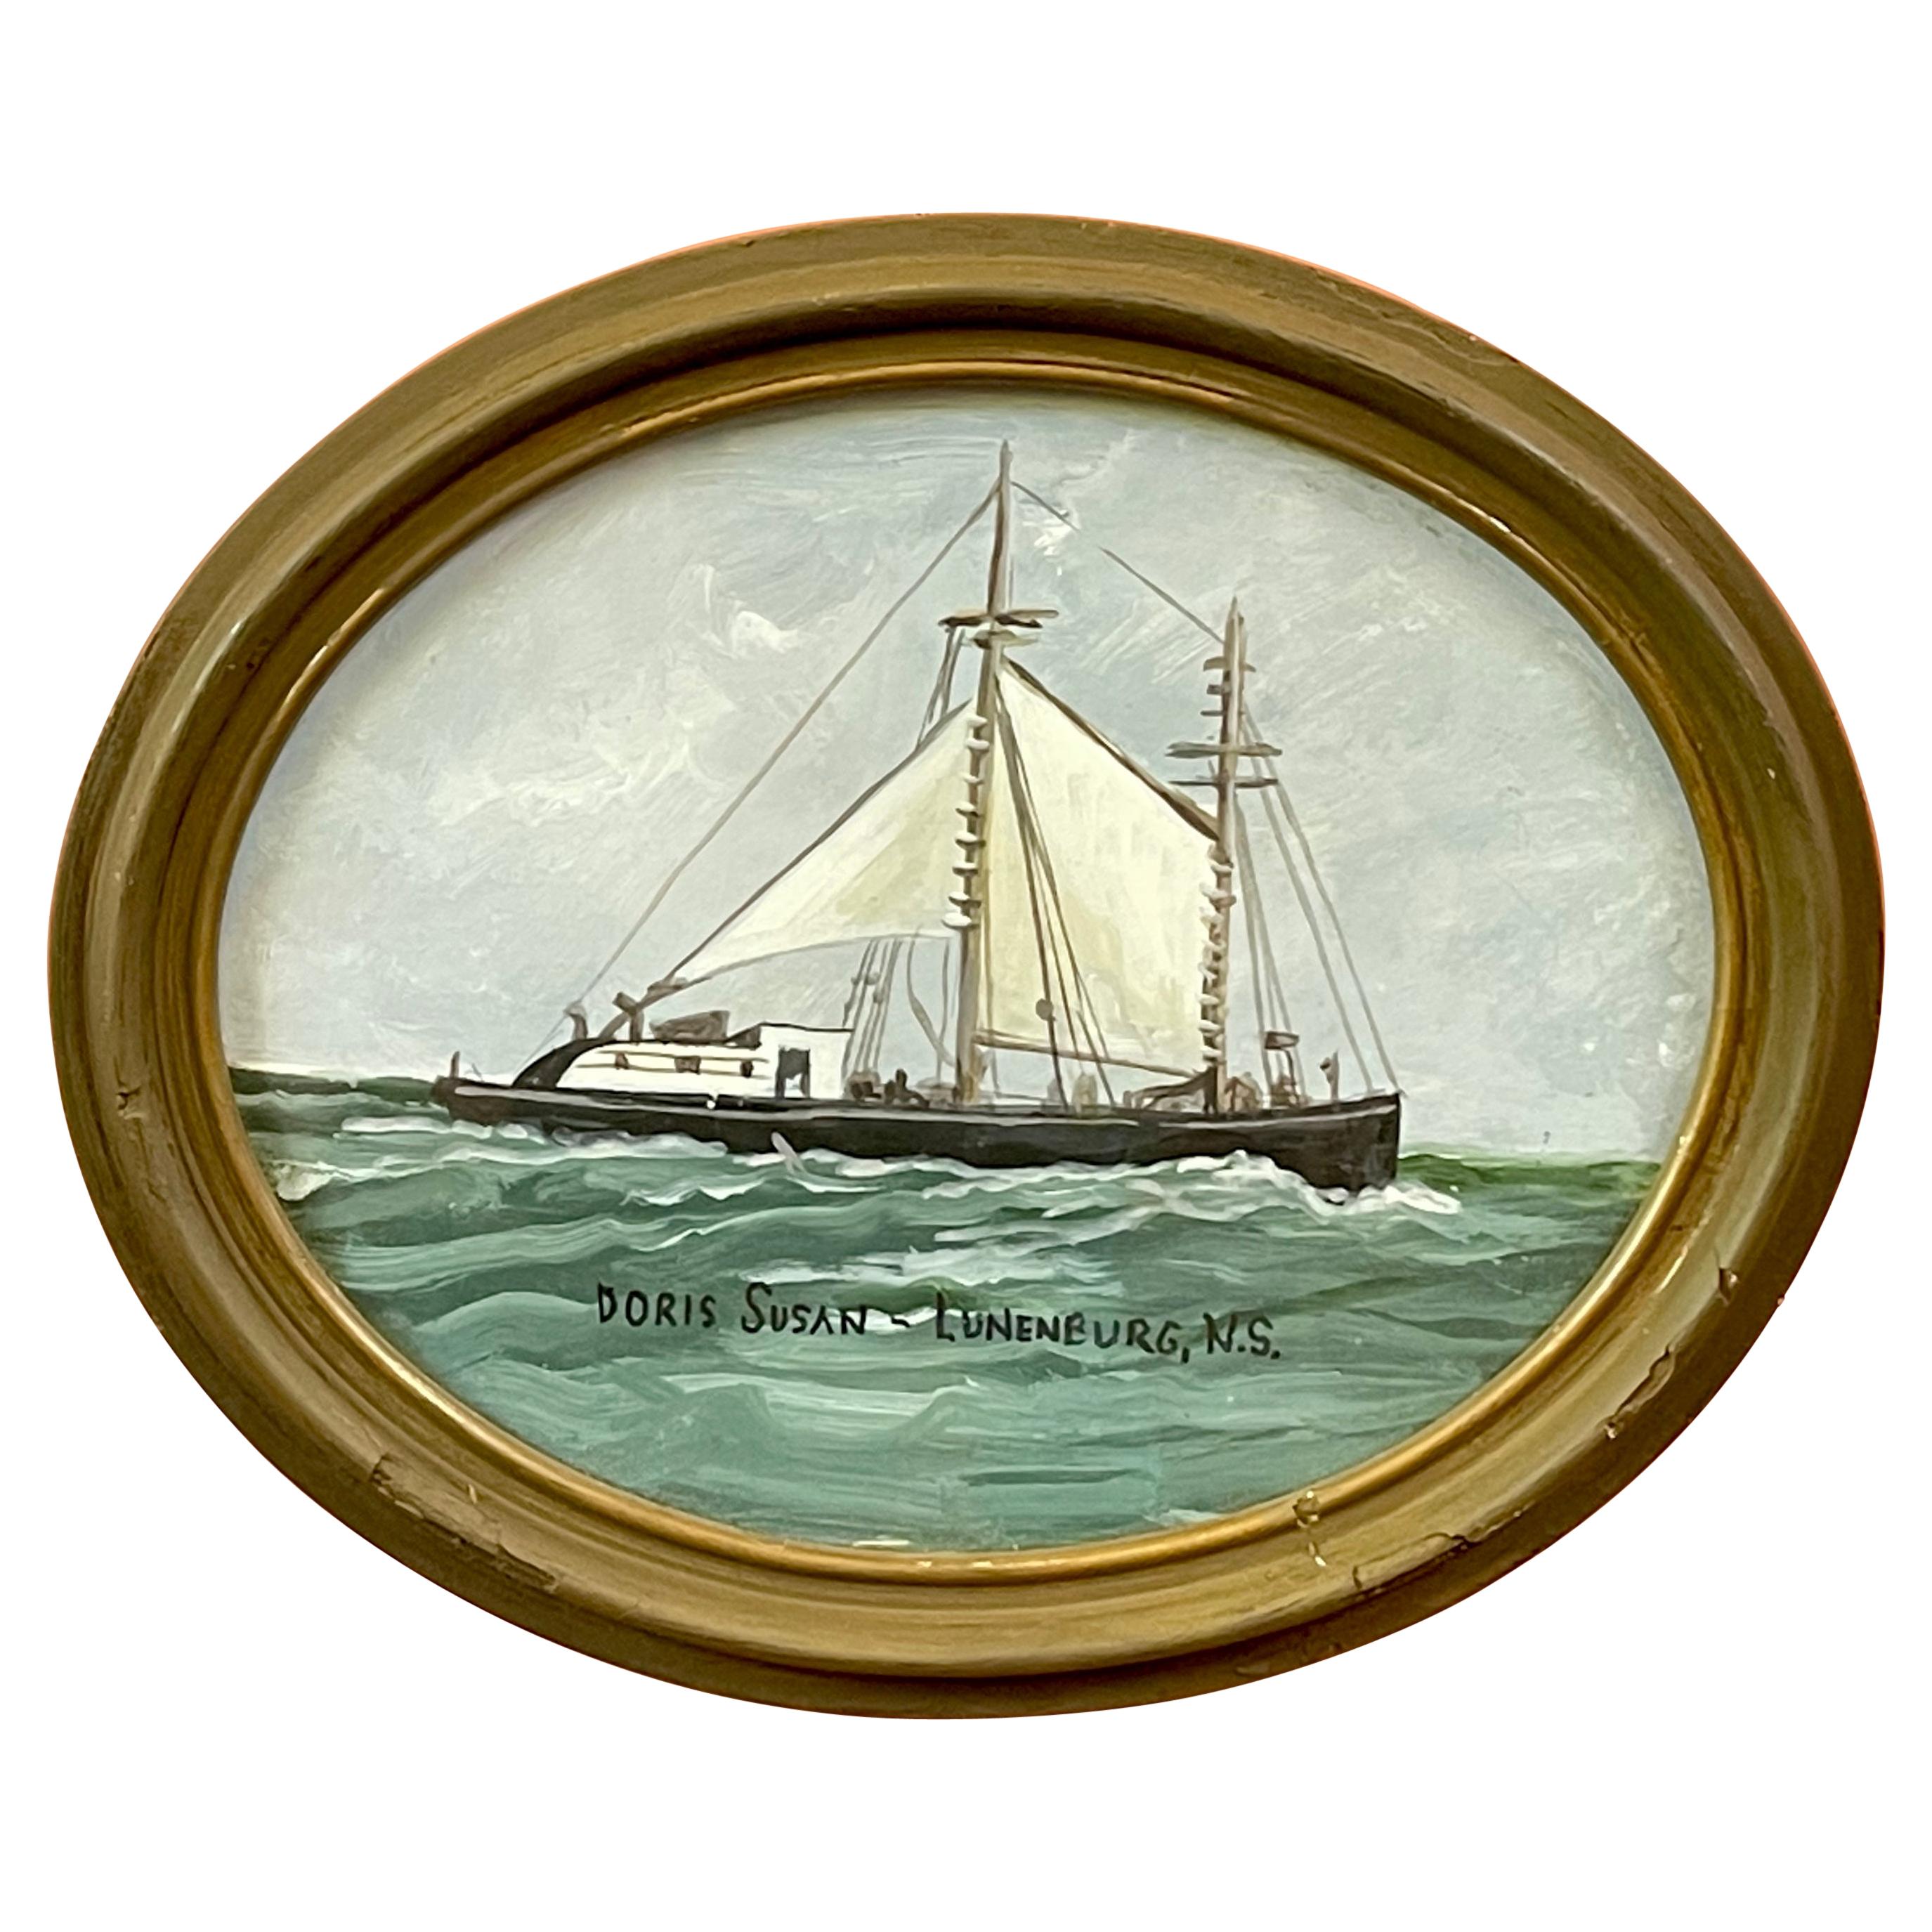 Oval Ship Painting of the "Doris Susan" Schooner, Lunenburg, Nova Scotia